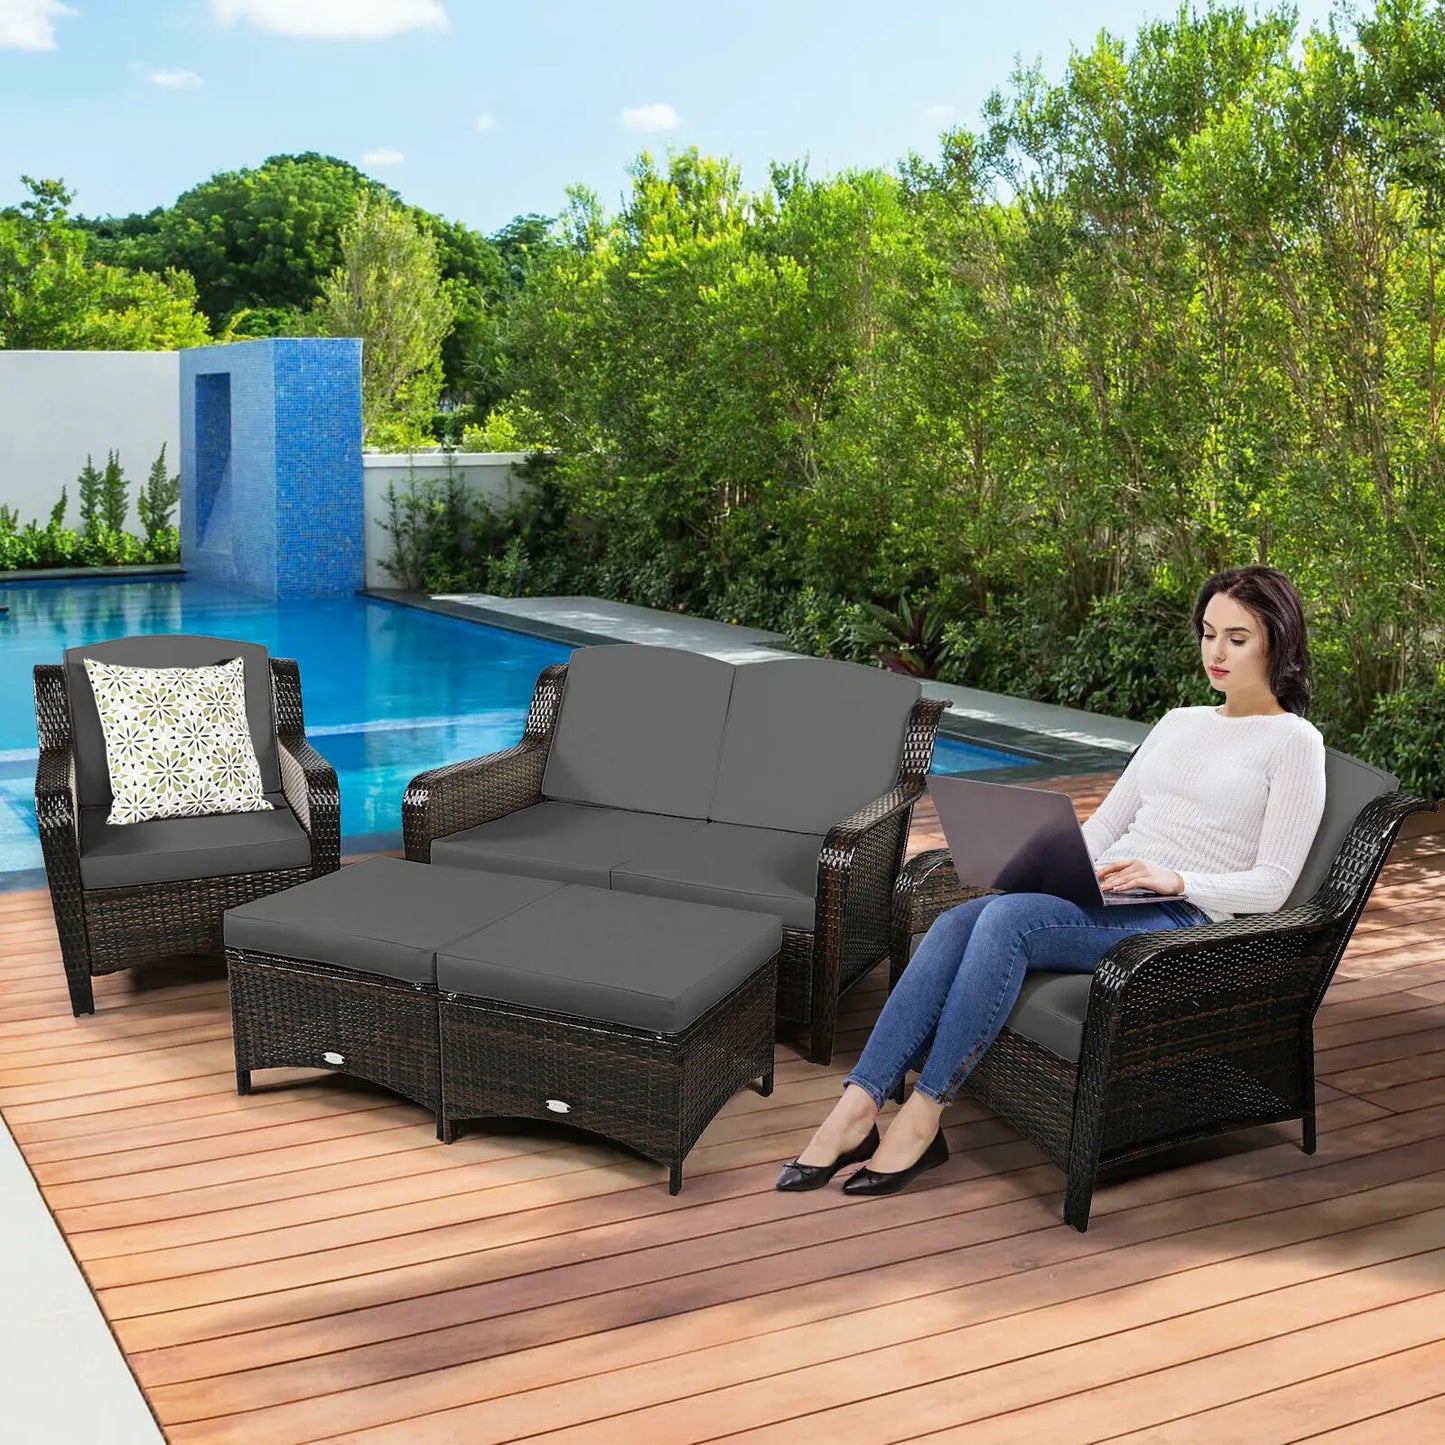 5 Pieces Patio Furniture Set Outdoor Rattan Conversation Sofa Set W/ Cushions